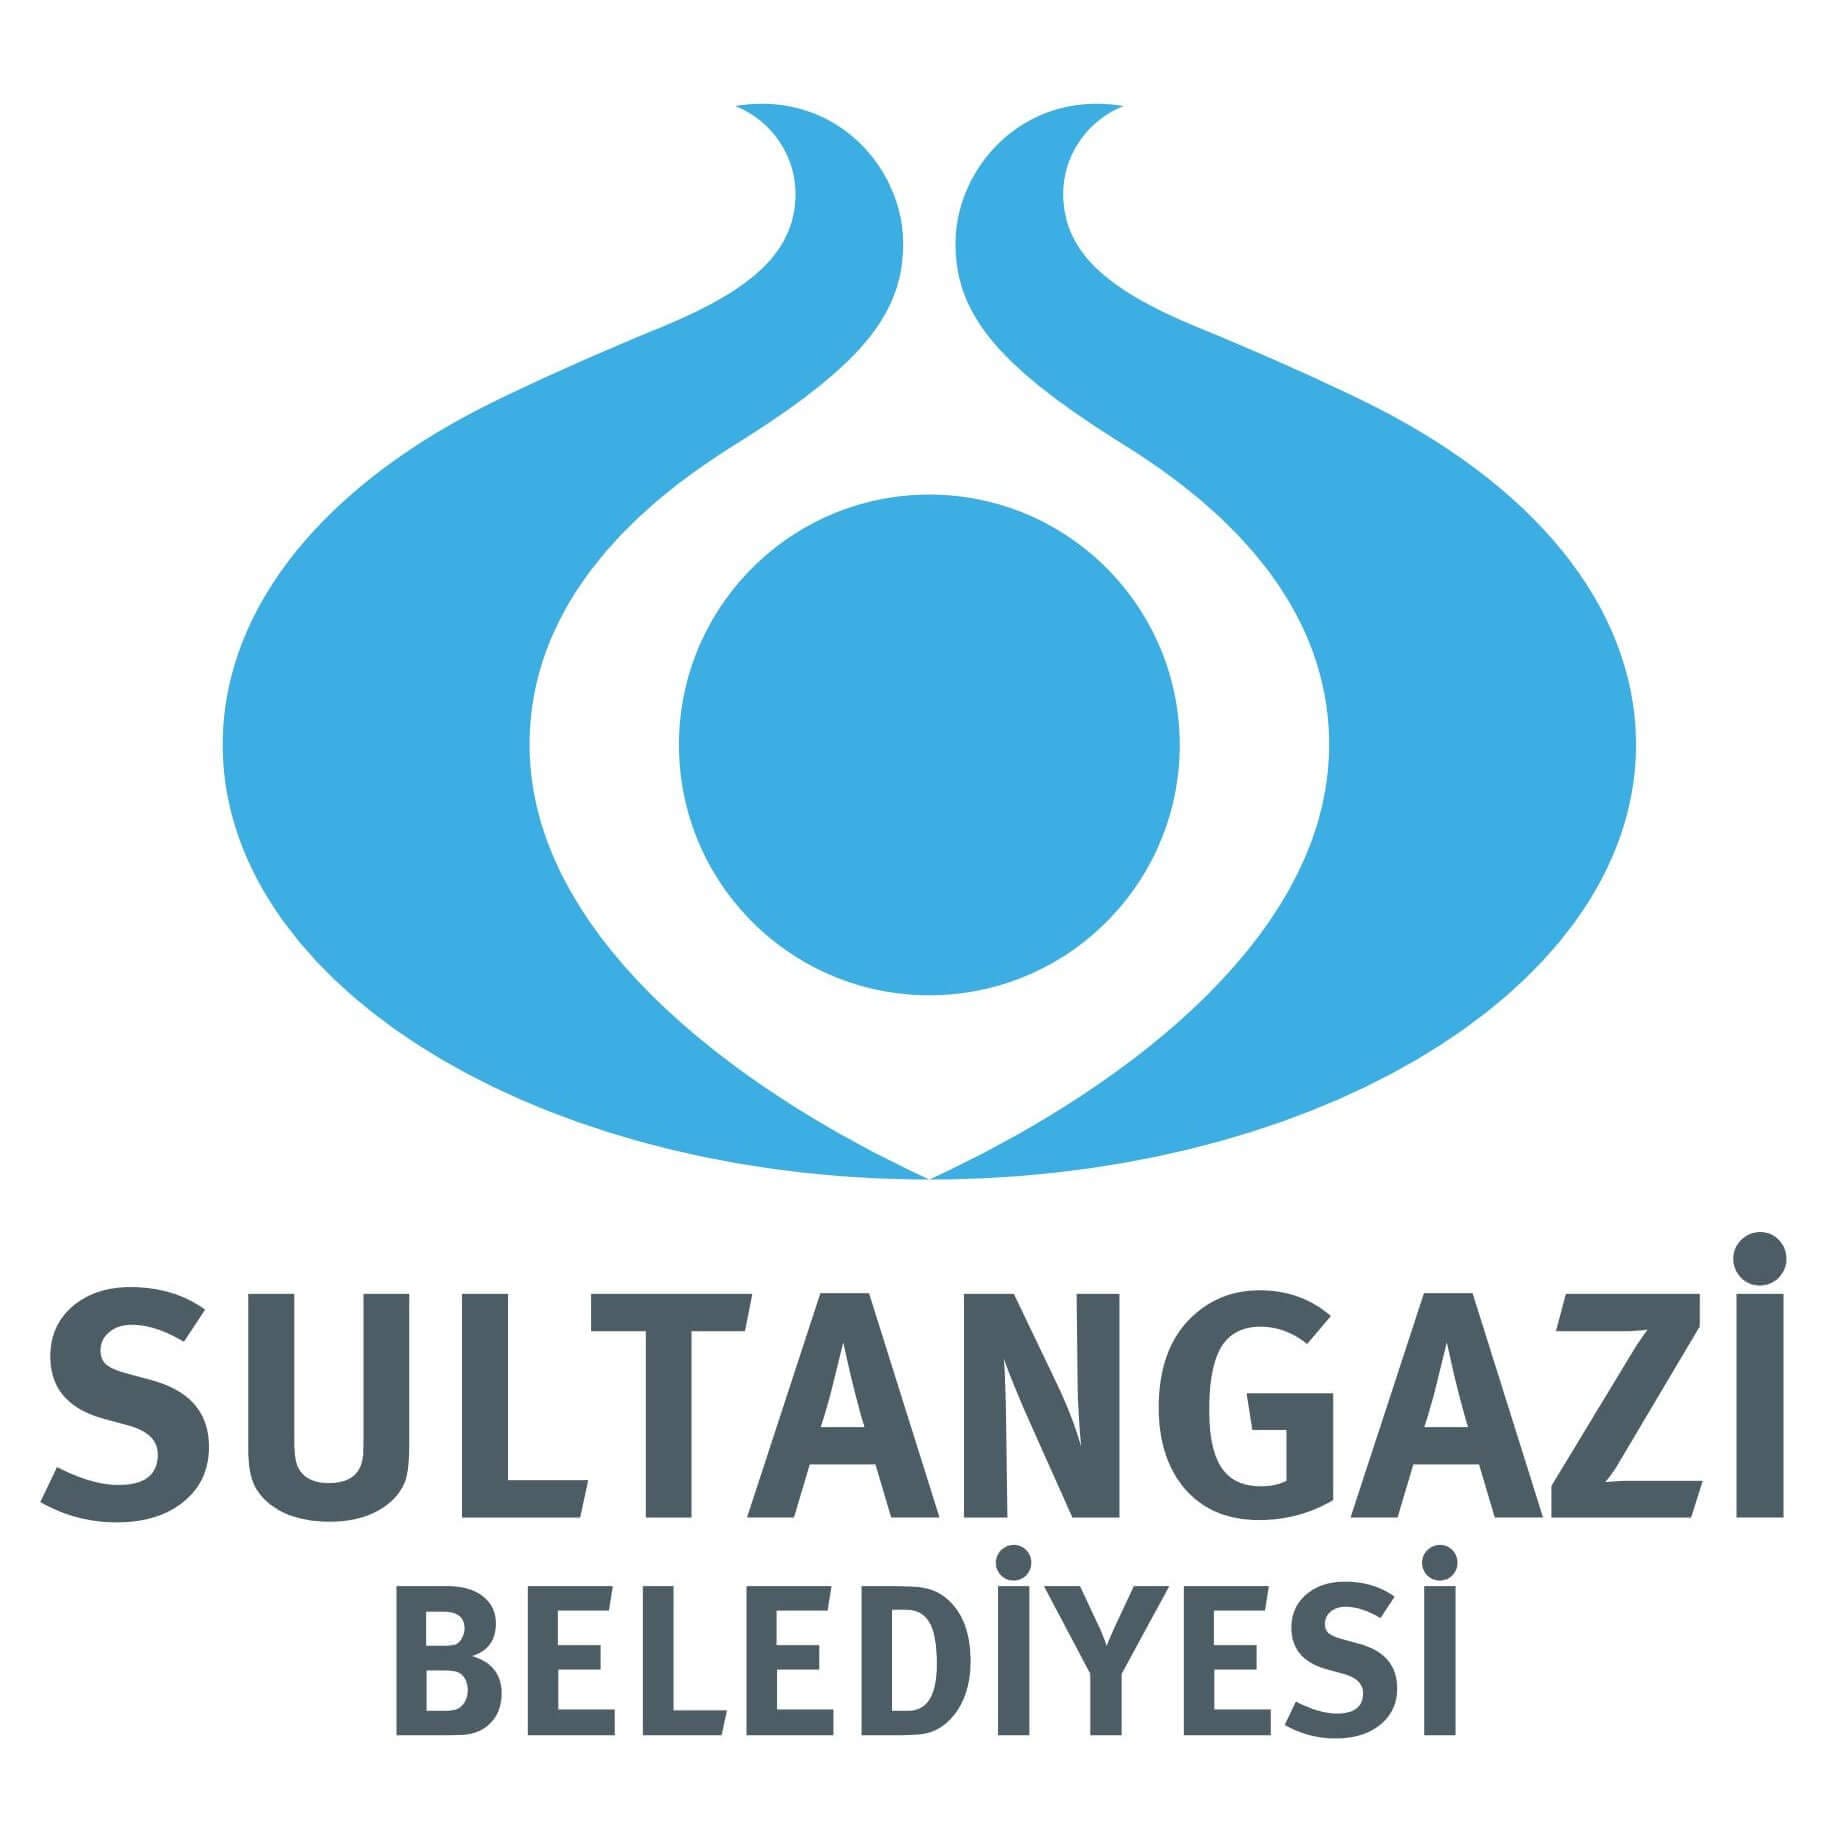 sultangazi belediyesi logo